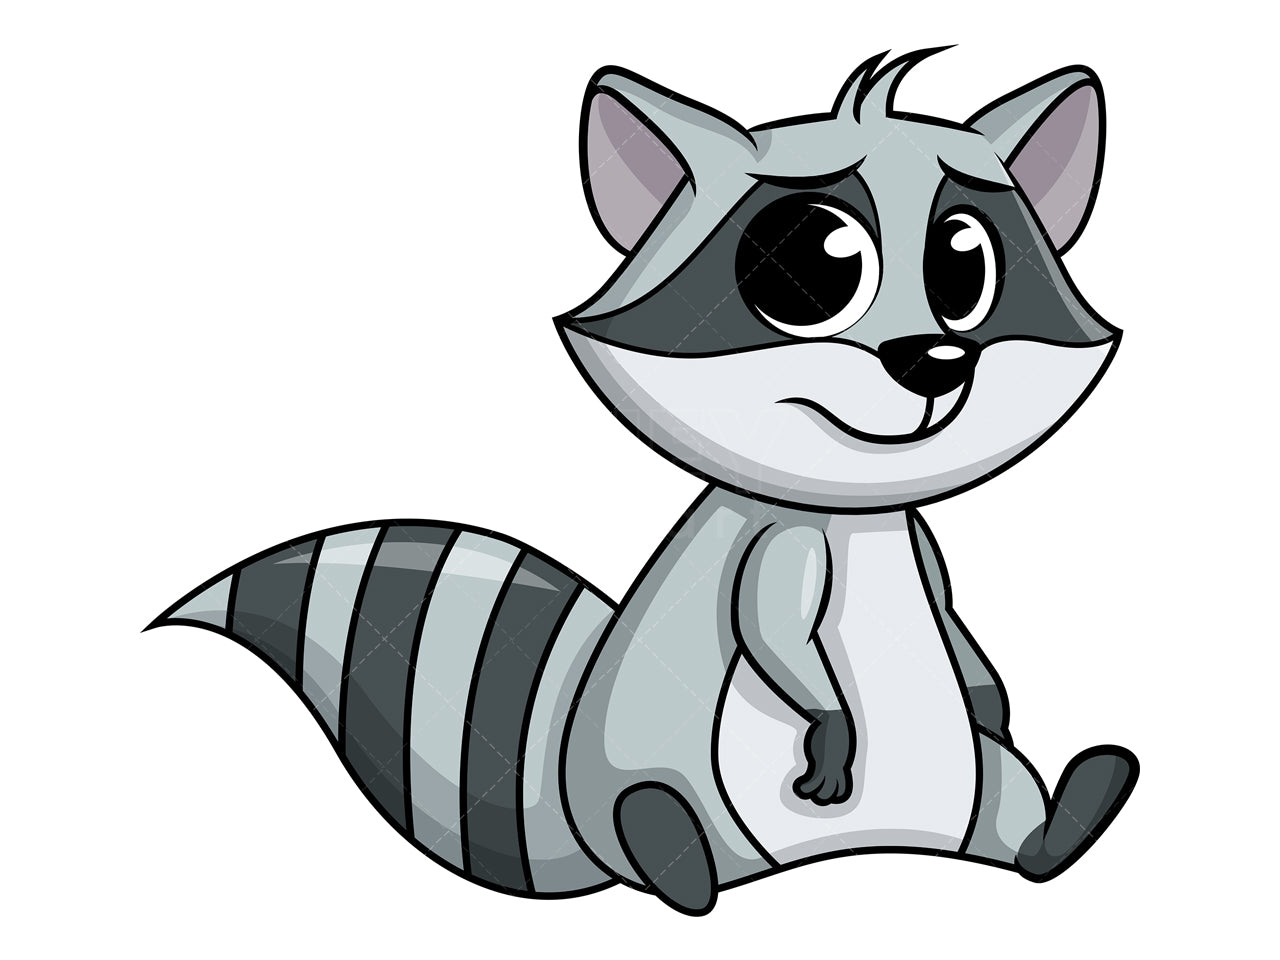 Royalty-free stock vector illustration of  a sad raccoon.